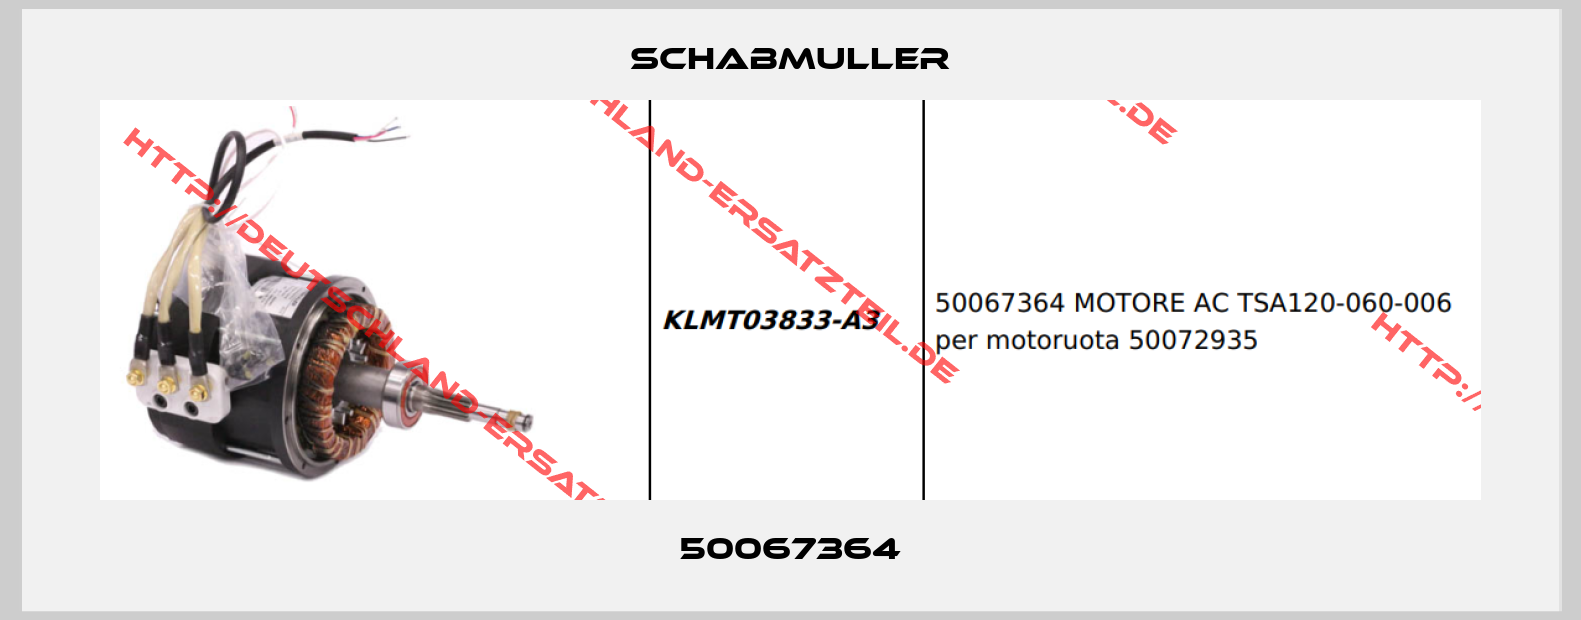 Schabmuller-50067364